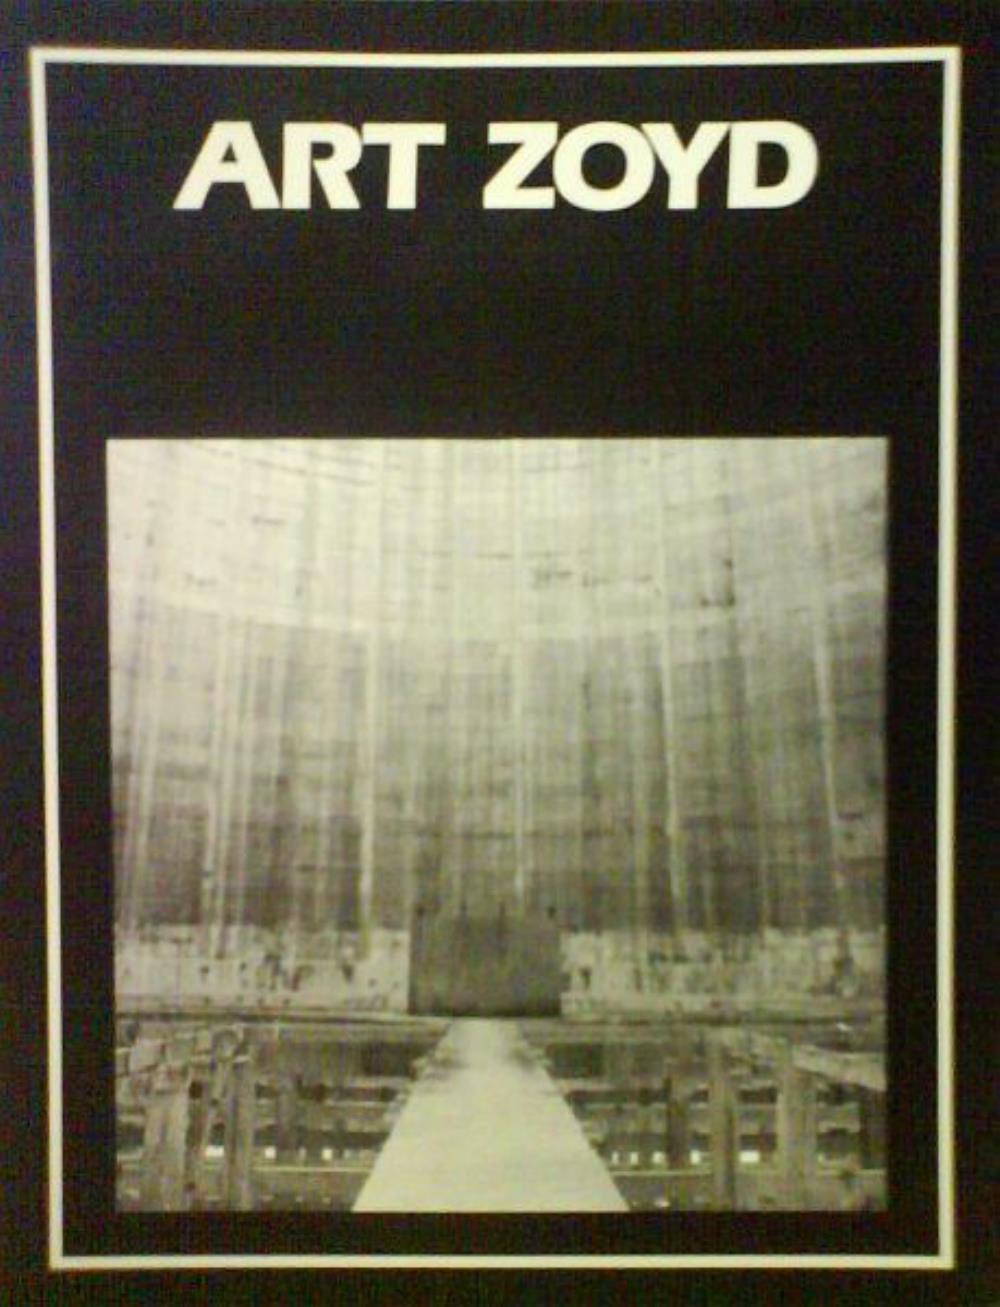 Art Zoyd Derniere Danse album cover